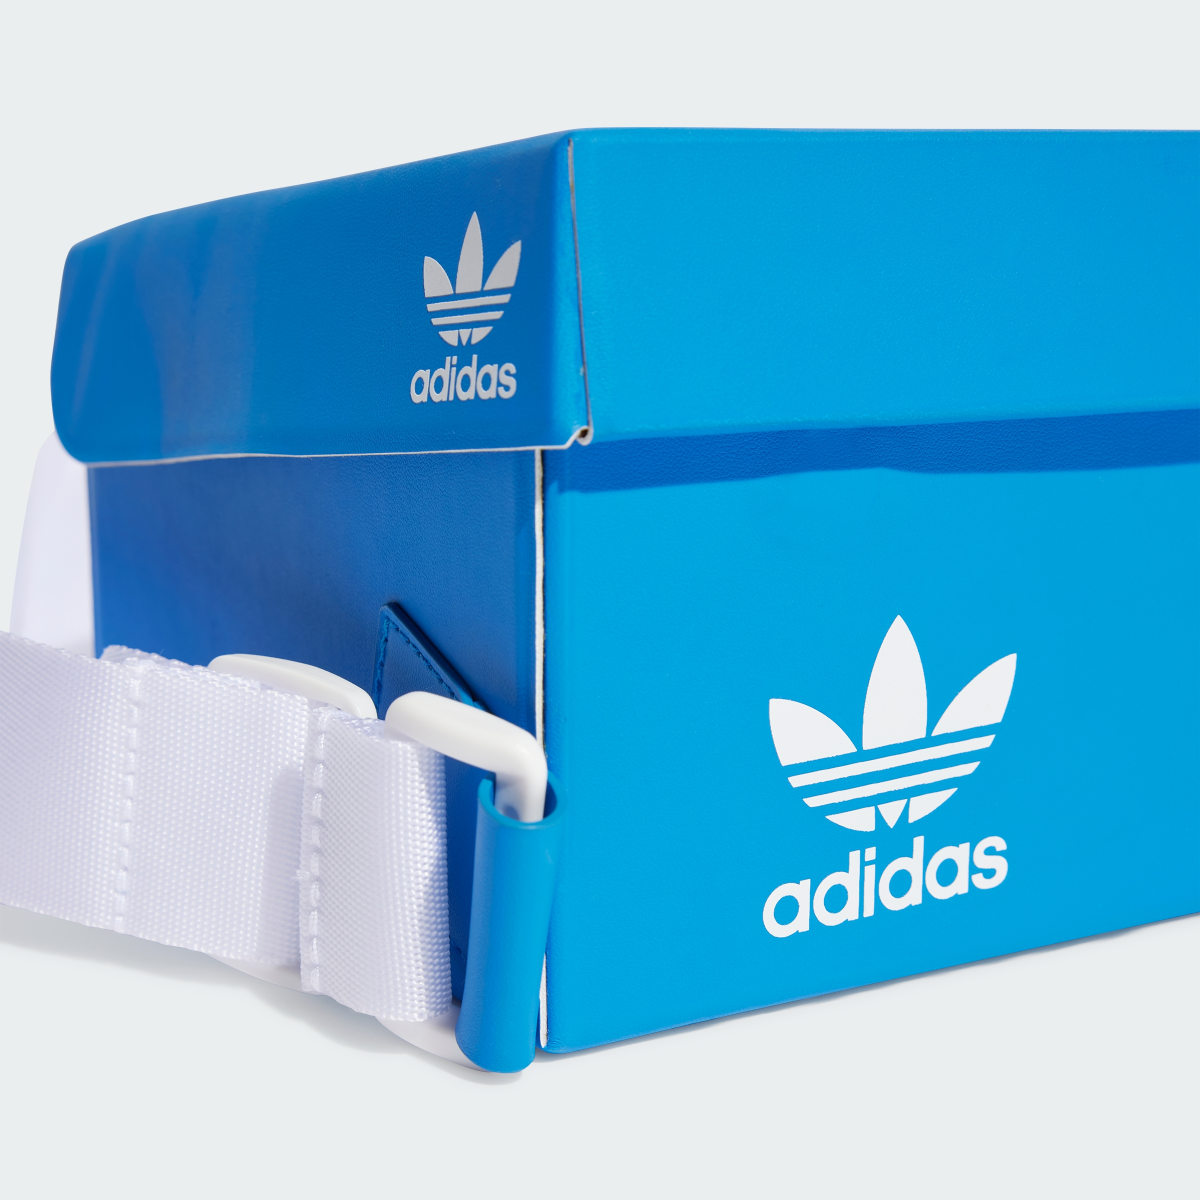 Adidas Bolsa Shoebox adidas Originals x KSENIASCHANIDER. 6